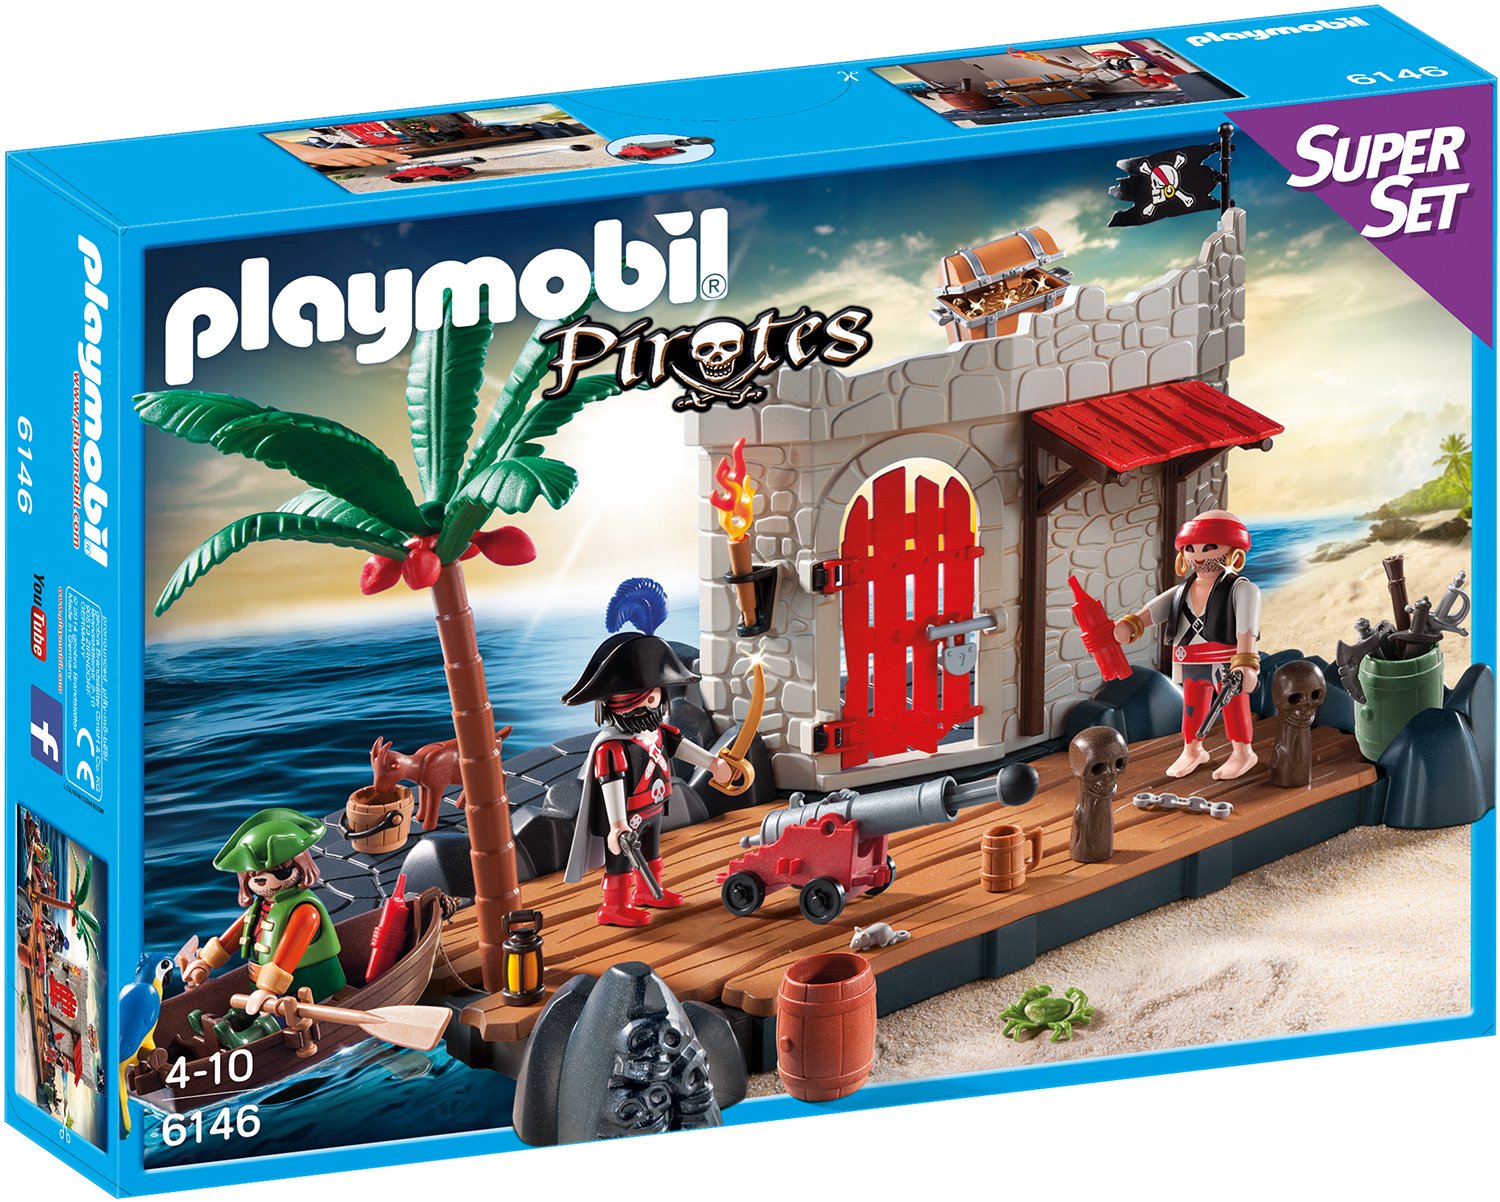 Playmobil Pirates Pirate Island Super Set